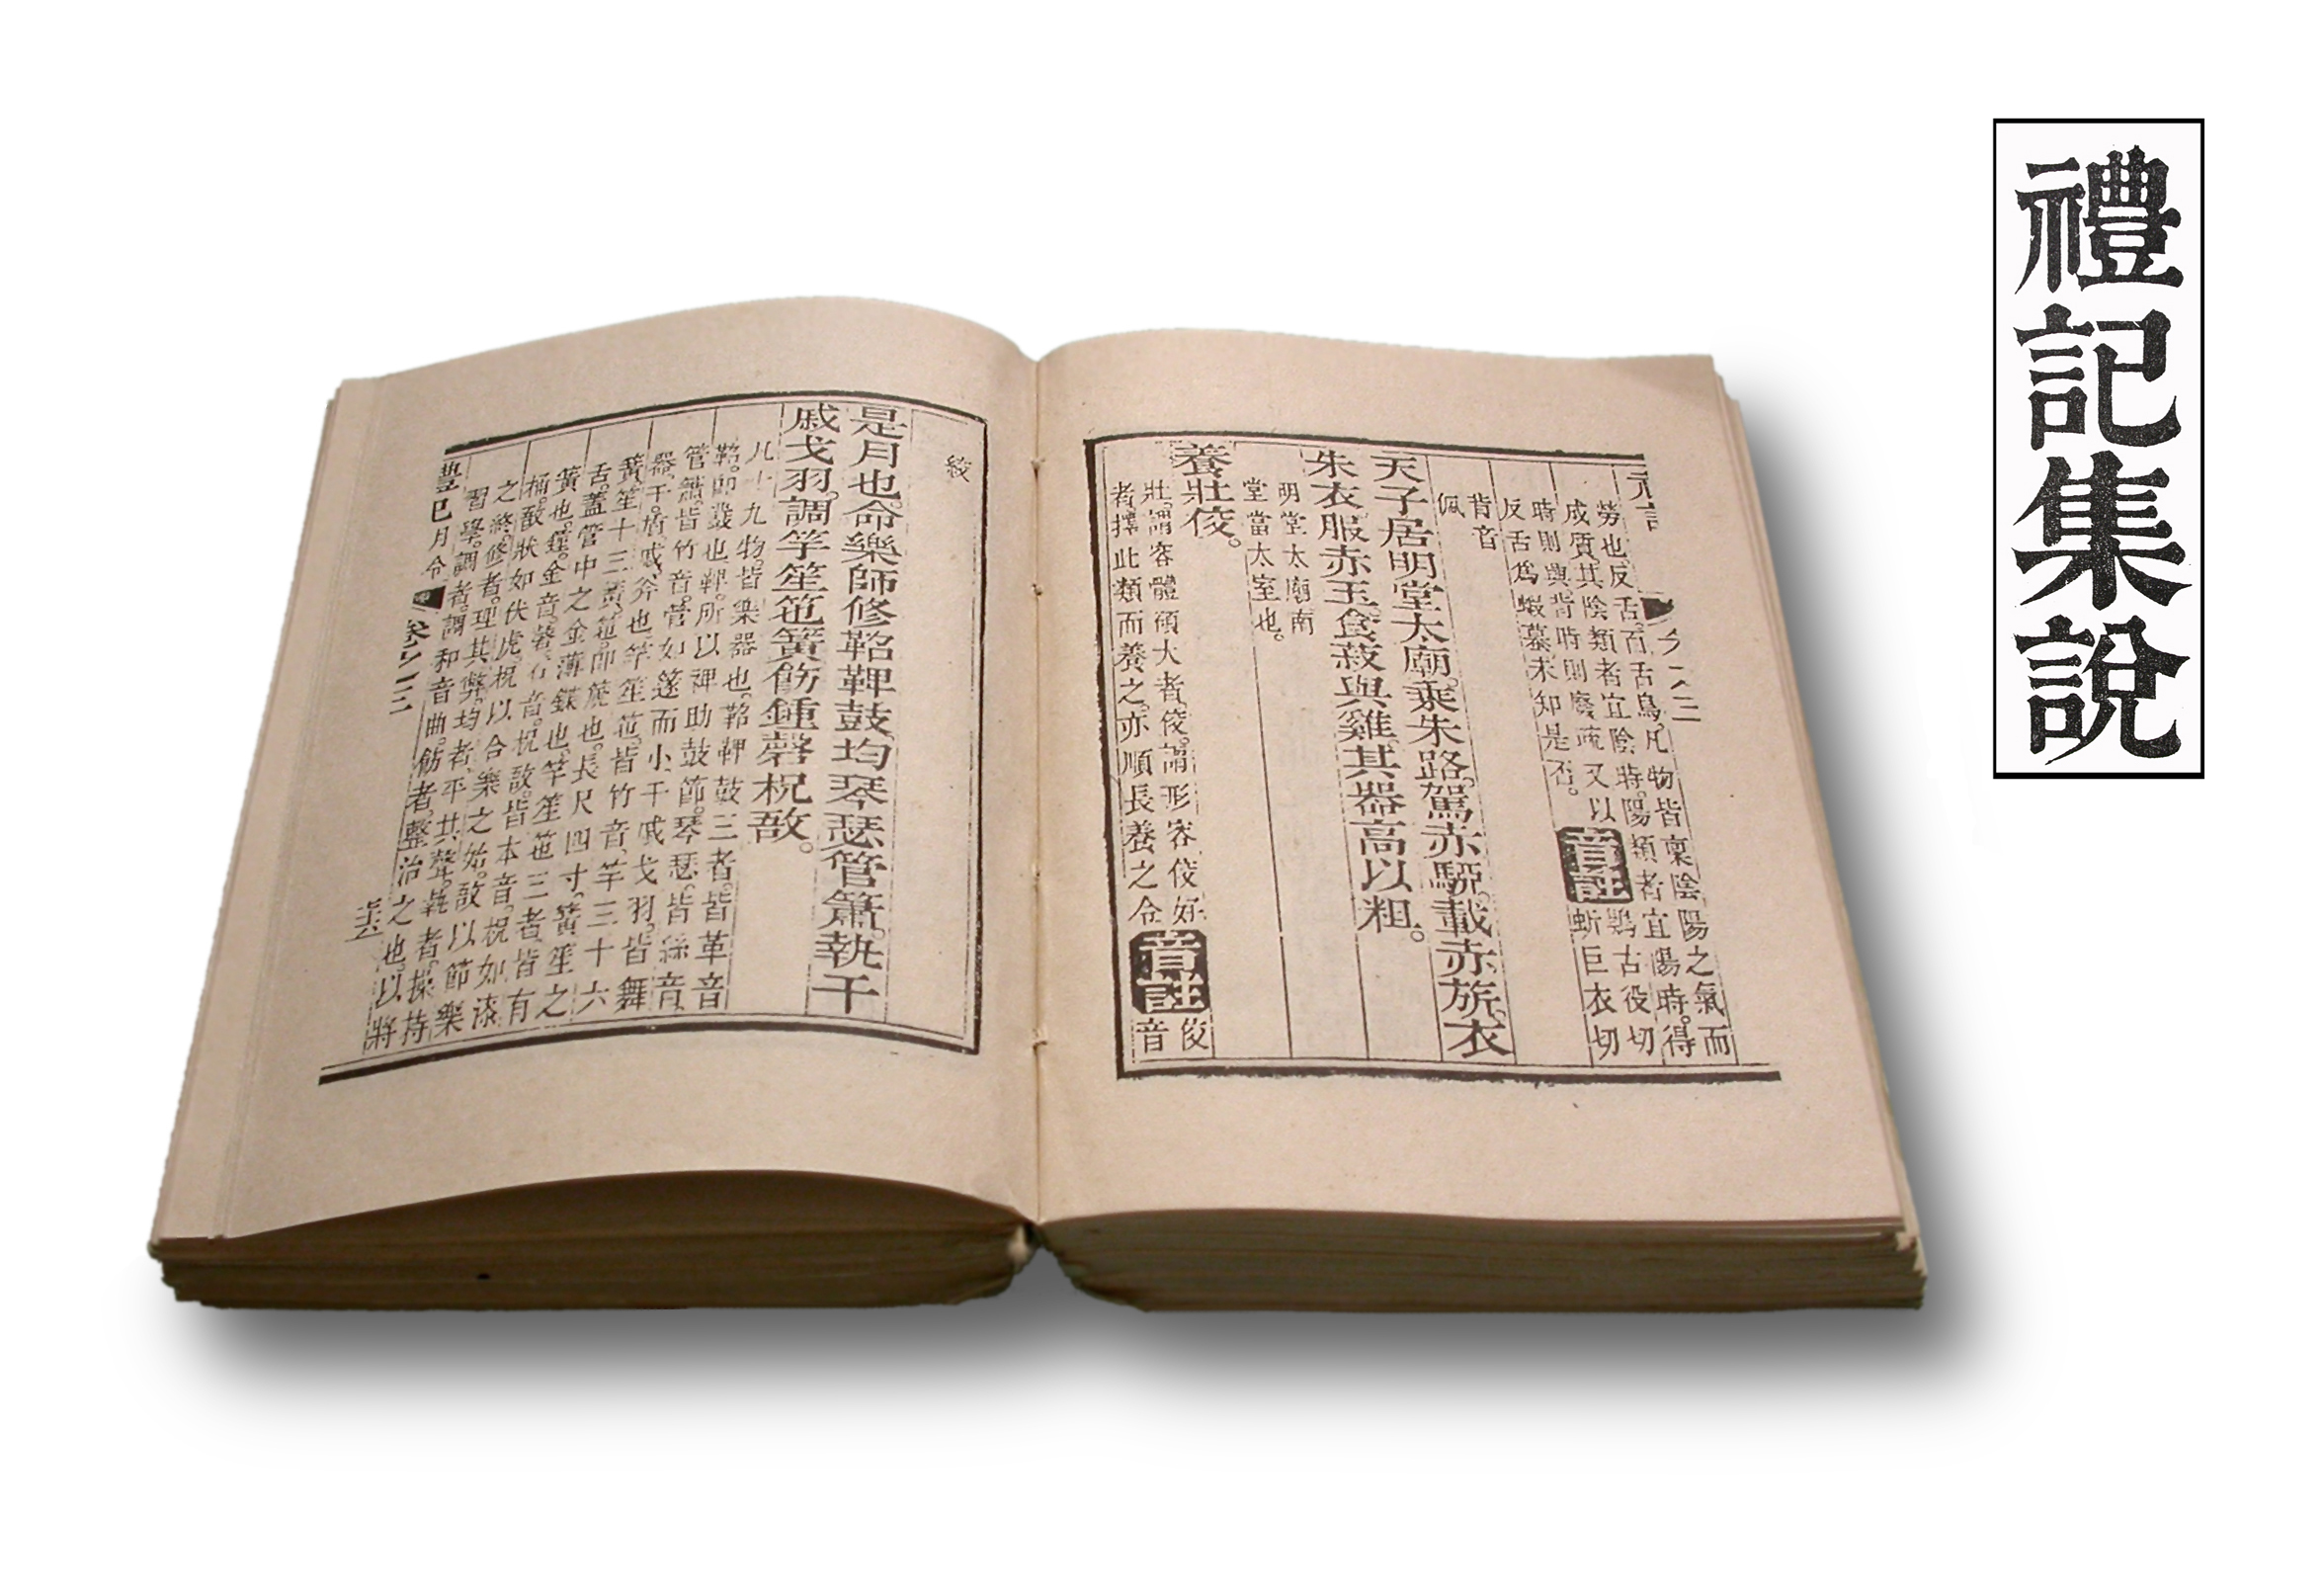 I Ching - Wikipedia, la enciclopedia libre